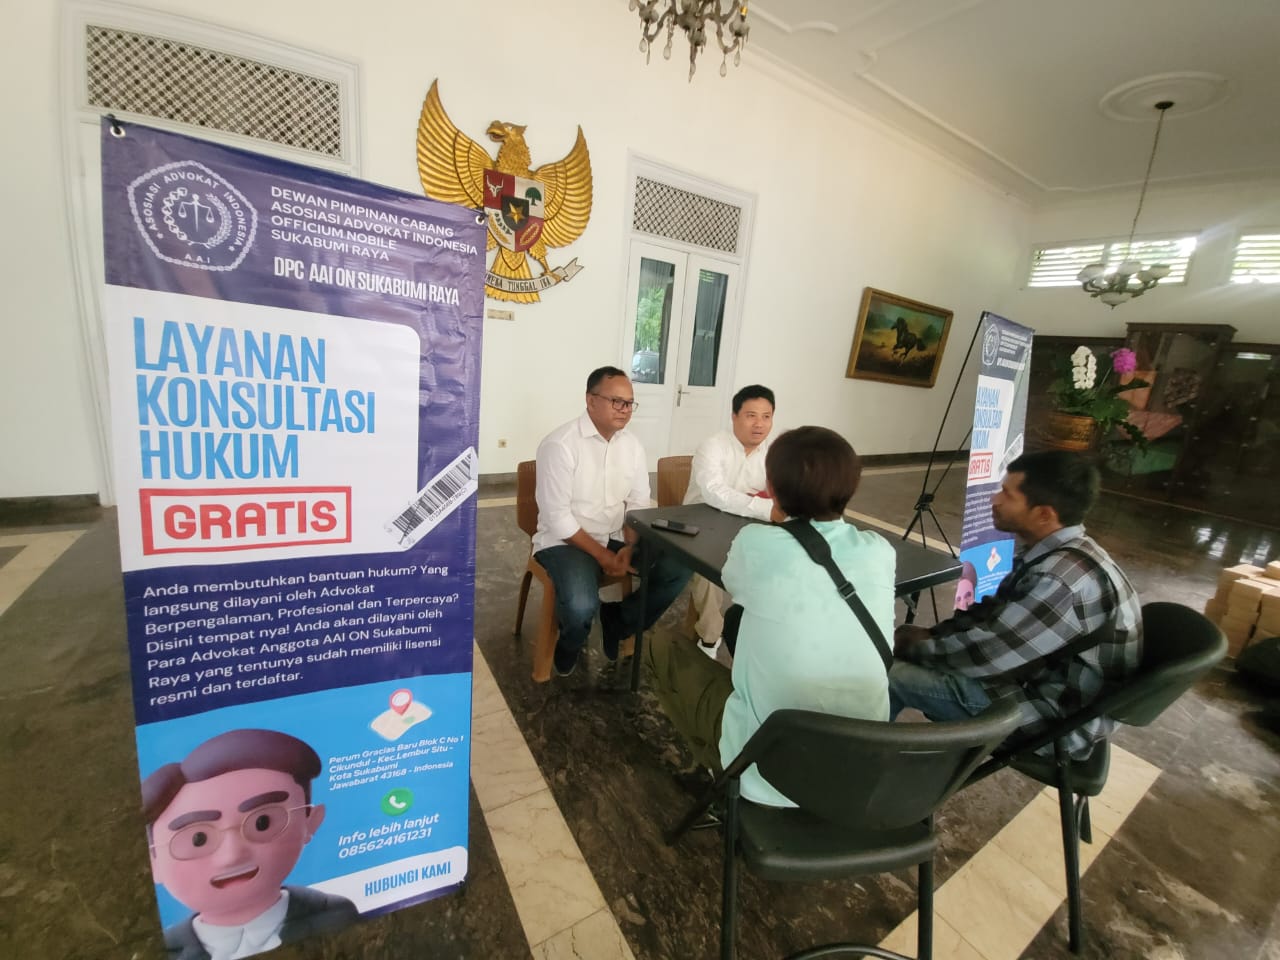 PELAYANAN: DPC AAI ON Sukabumi Raya saat menggelar konsultasi hukum gratis di Jalan Ahmad Yani, Kecamatan Warudoyong, Kota Sukabumi, Minggu (24/3).